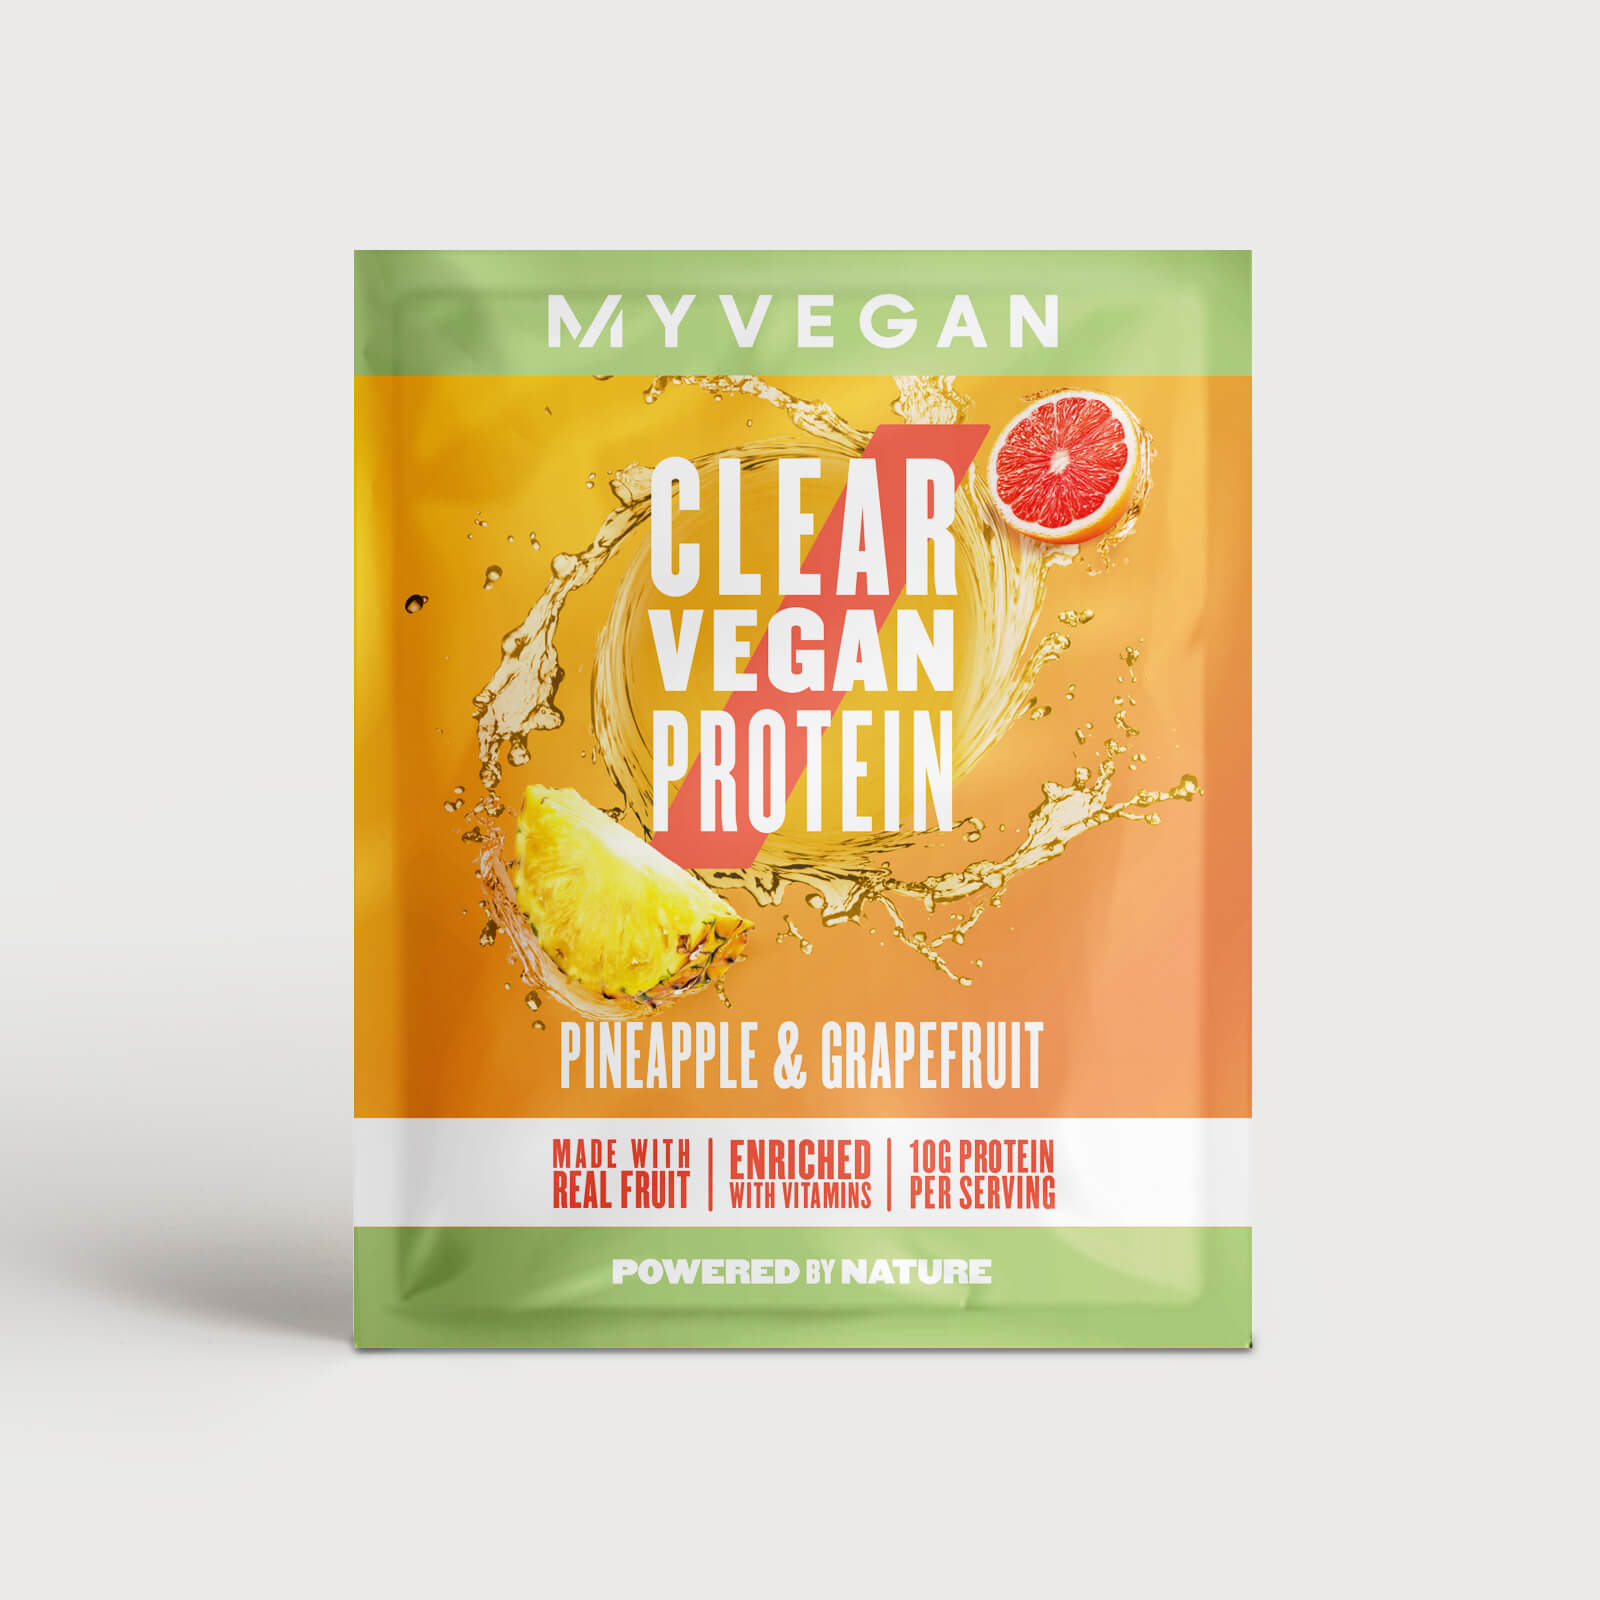 Myvegan Clear Vegan Protein, 16g (Sample) - 16g - Pineapple & Grapefruit